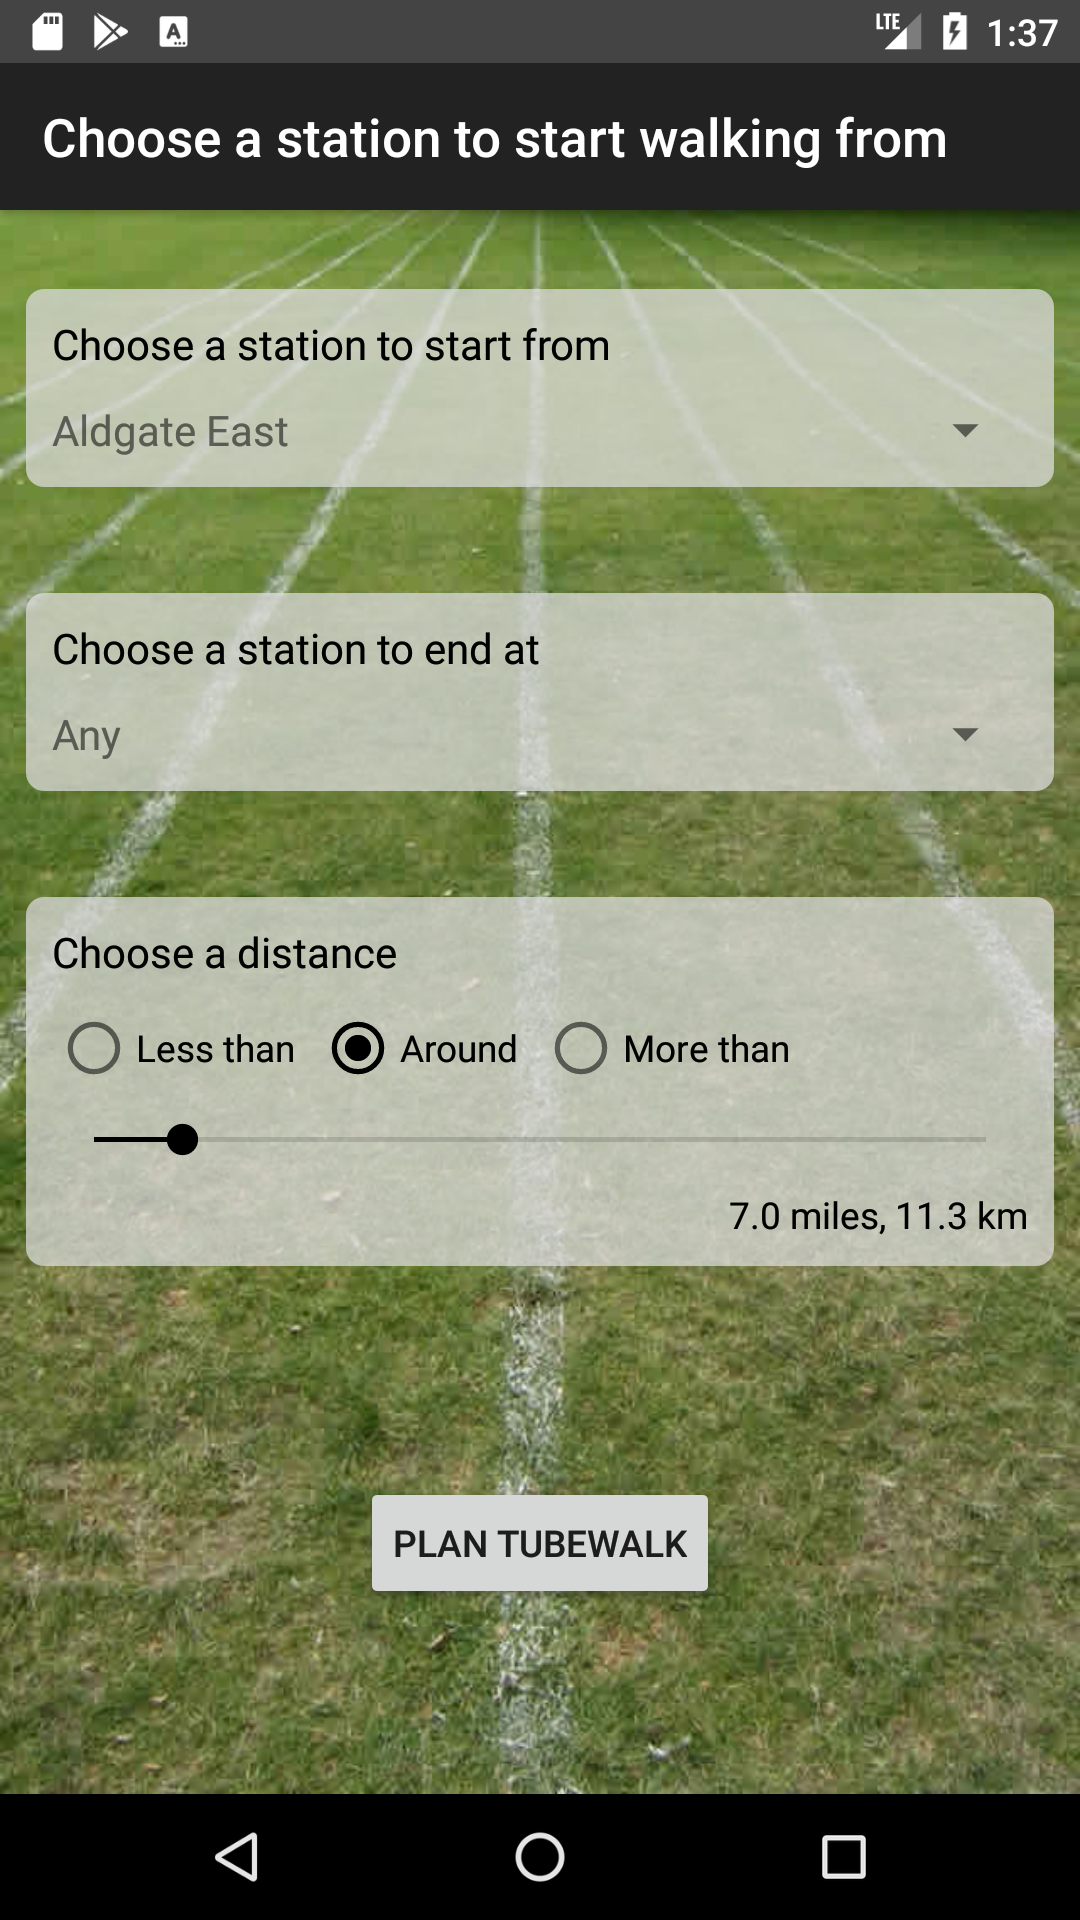 The tubewalk planner in the Tubewalker Android application